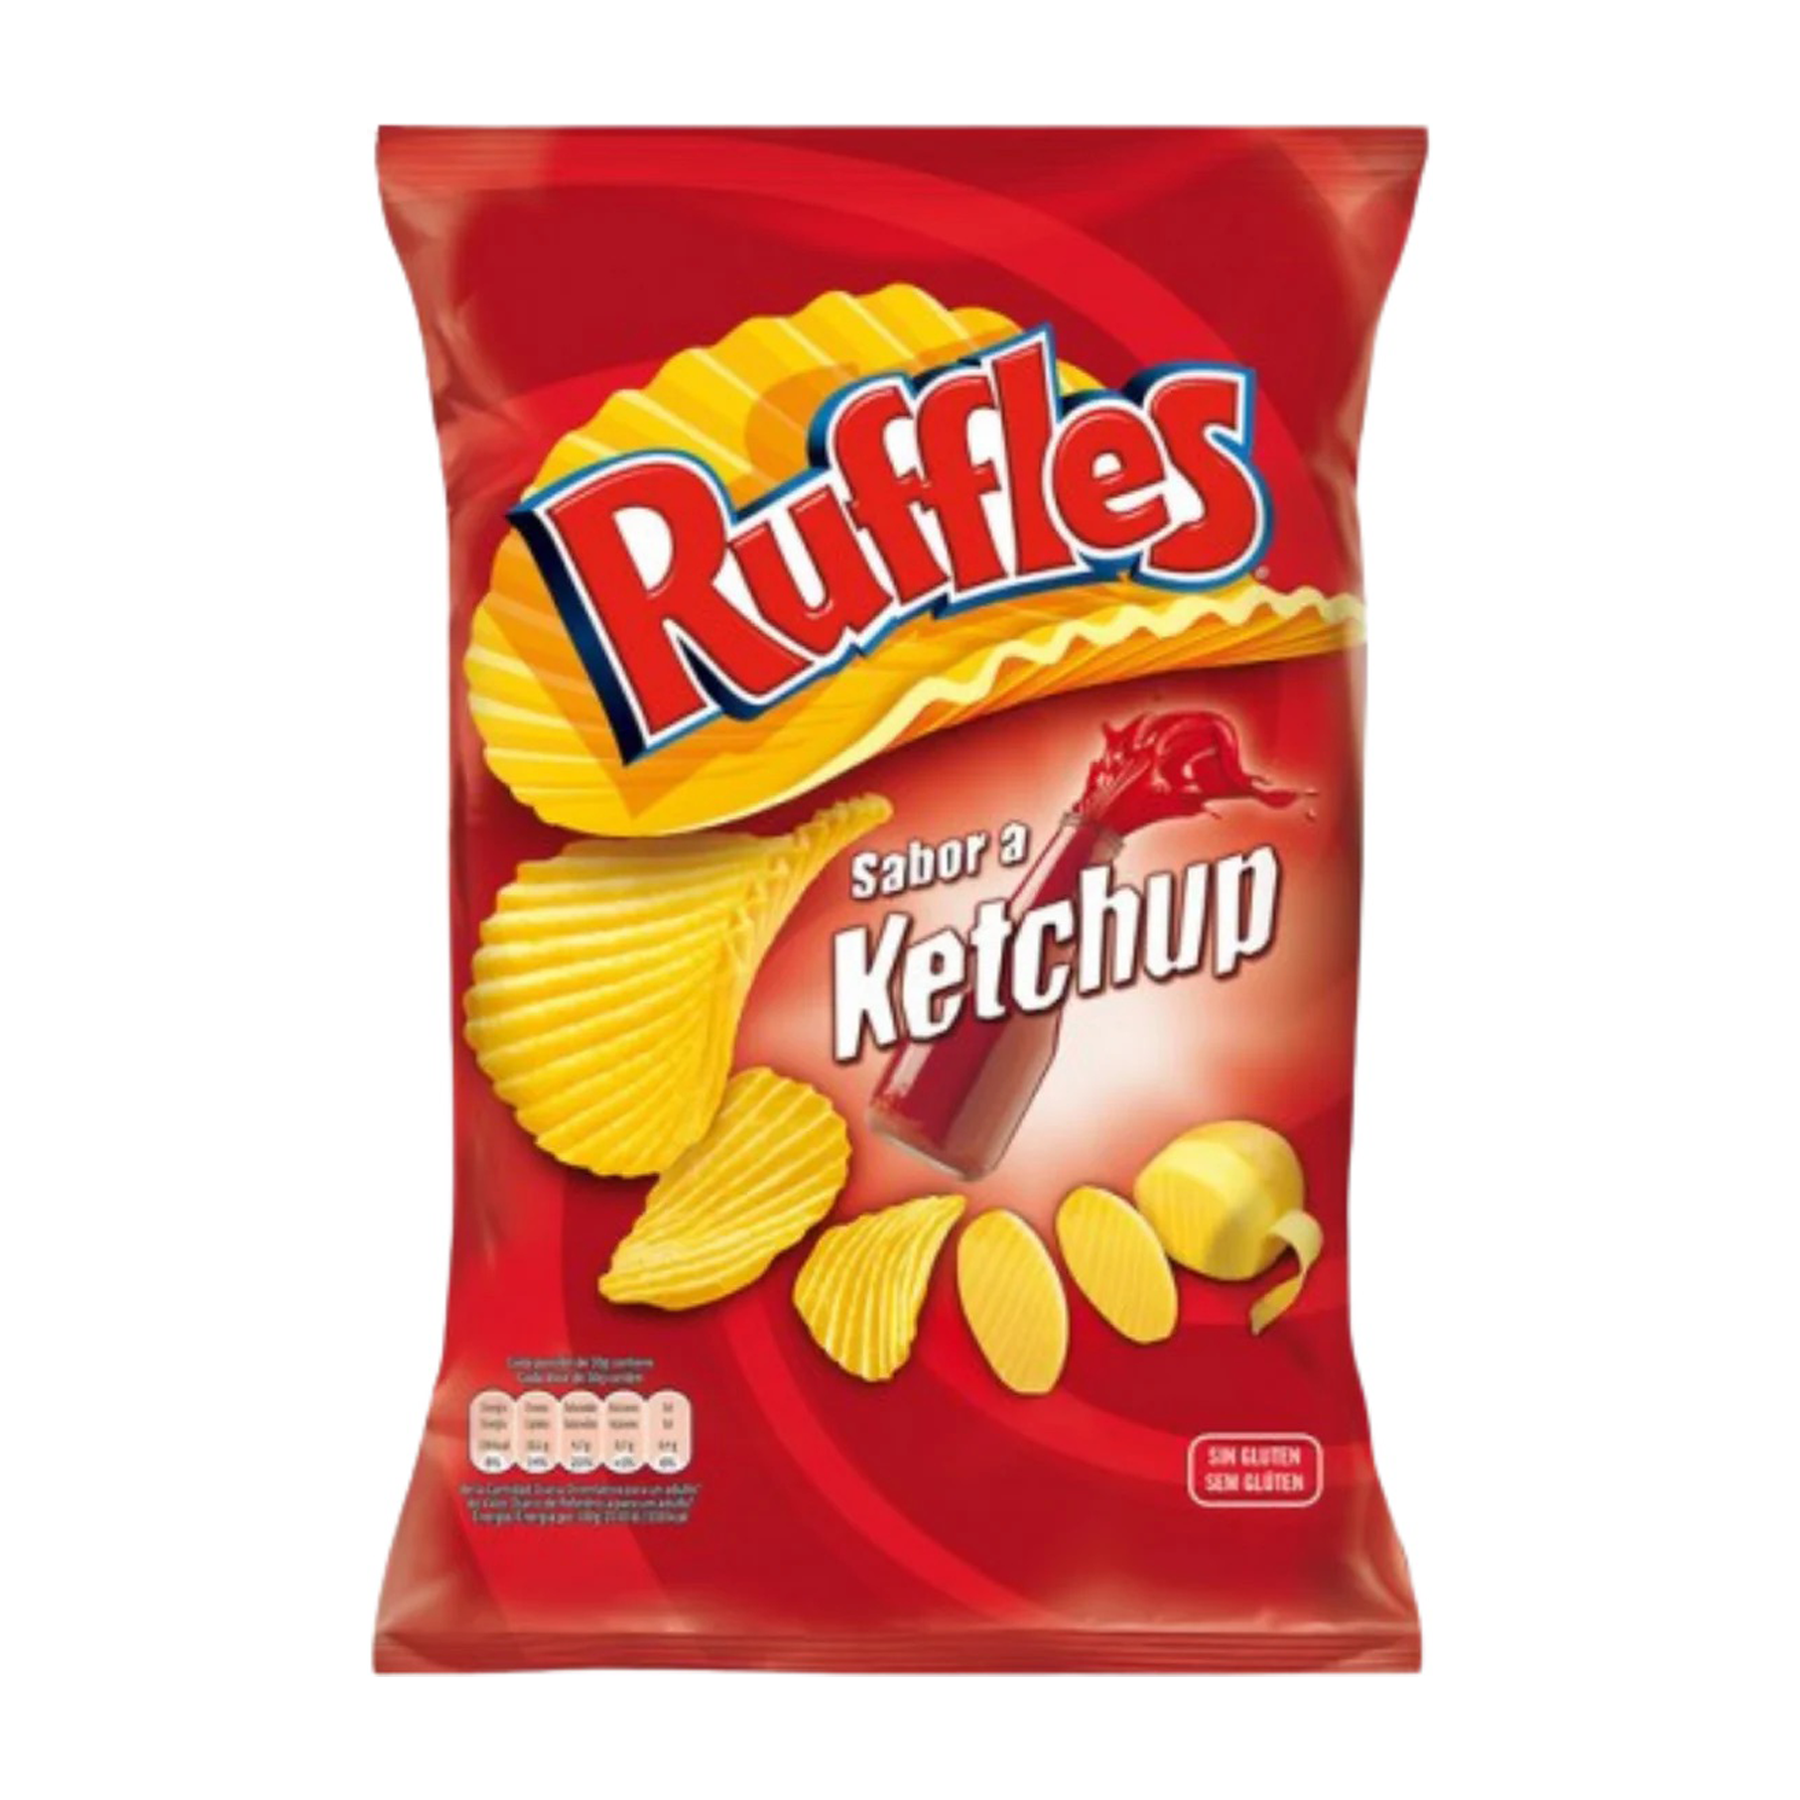 Ruffles Ketchup Flavored Chips